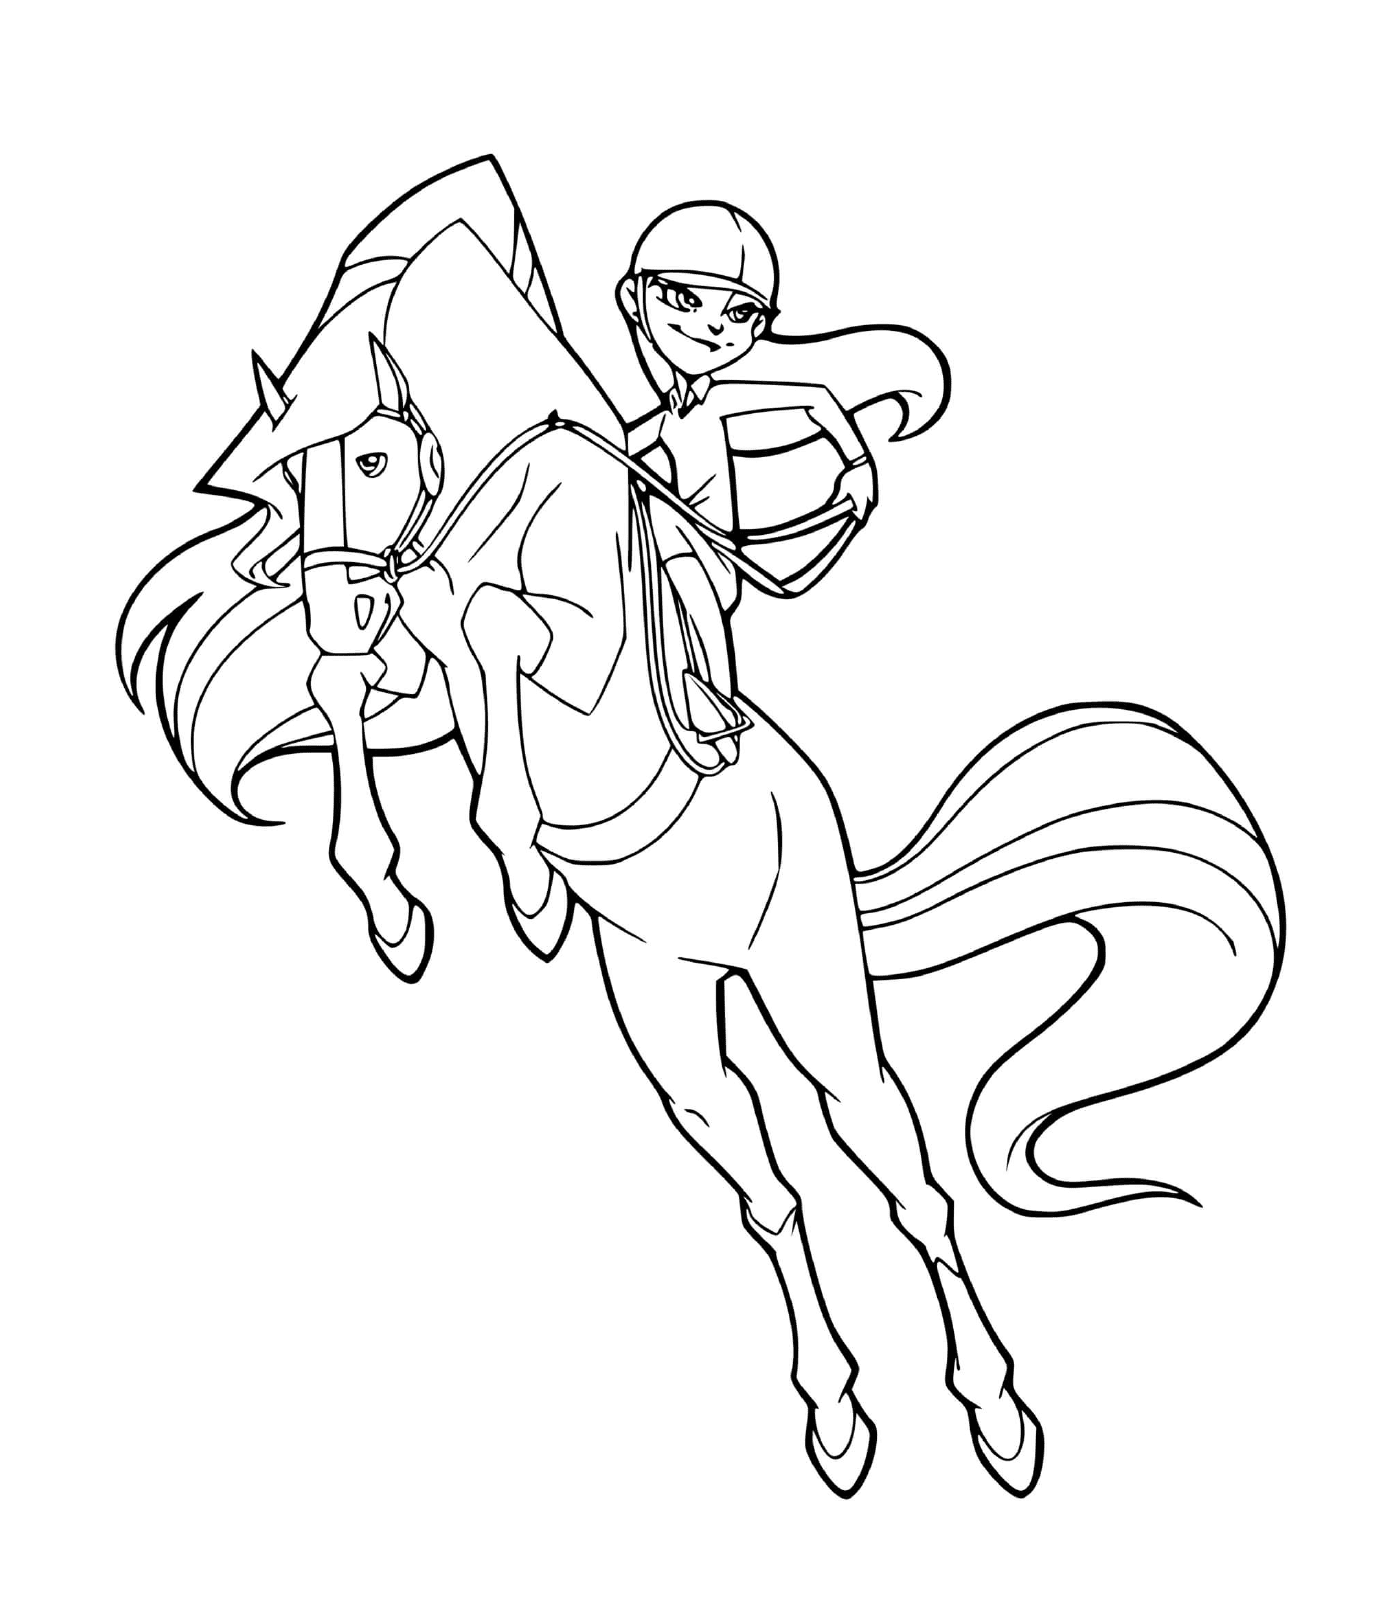 coloriage chloe 12 ans monte sur son cheval chili horseland